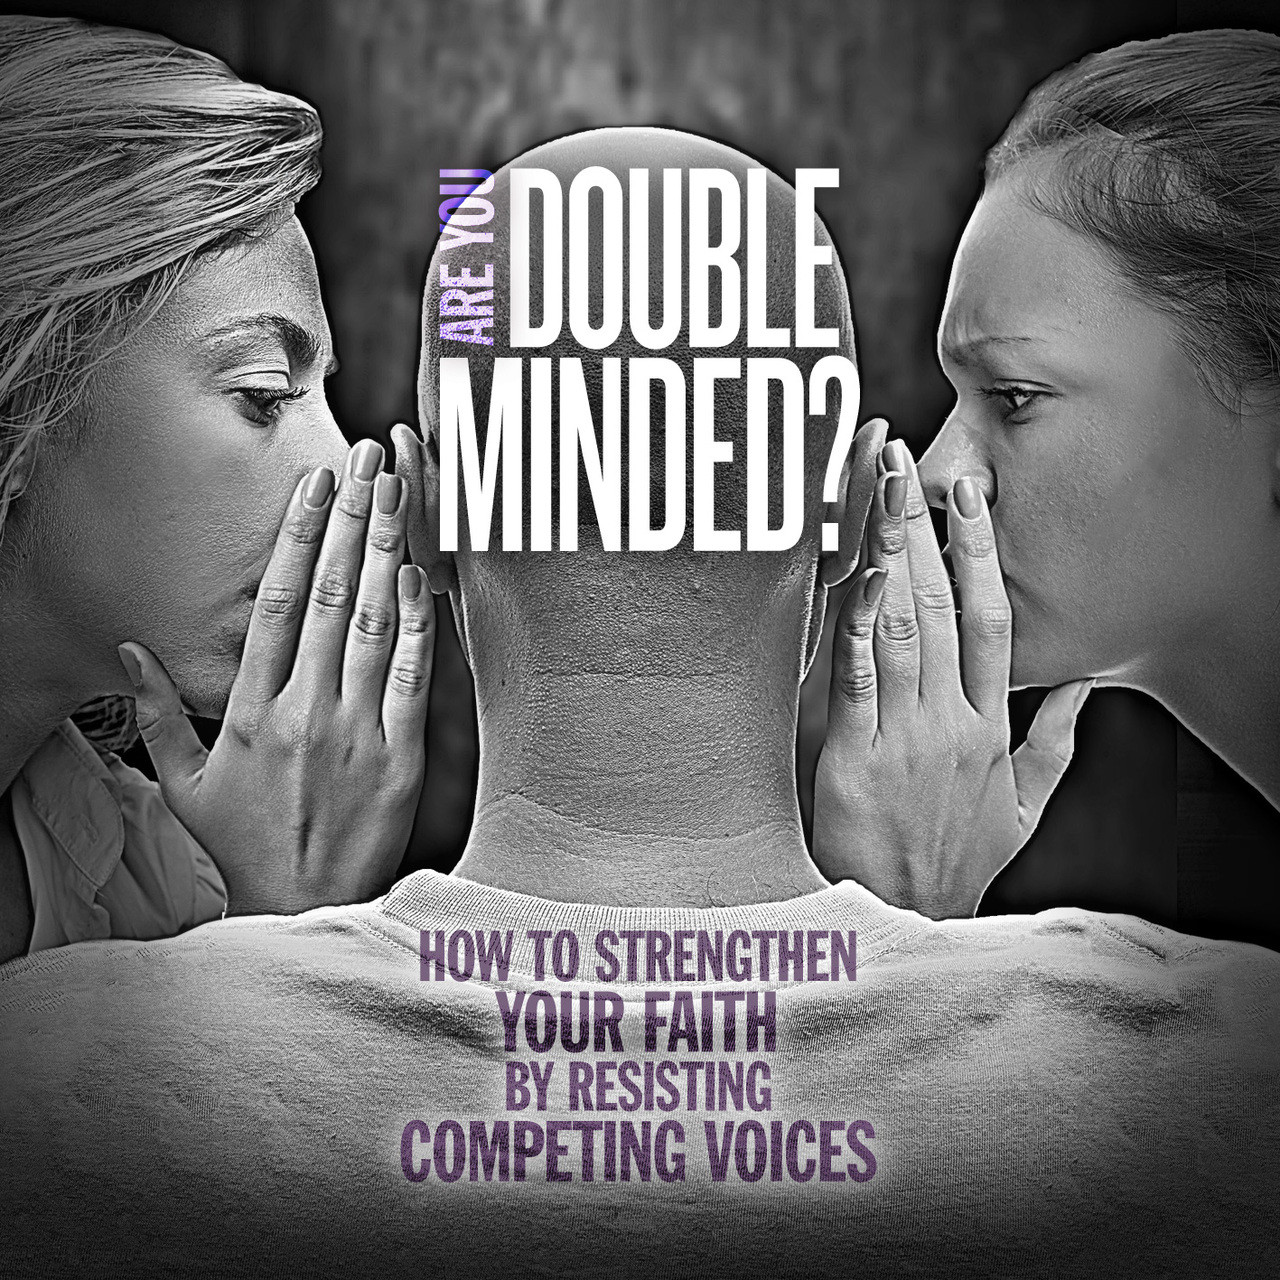 Single mindedness vs double mindedness